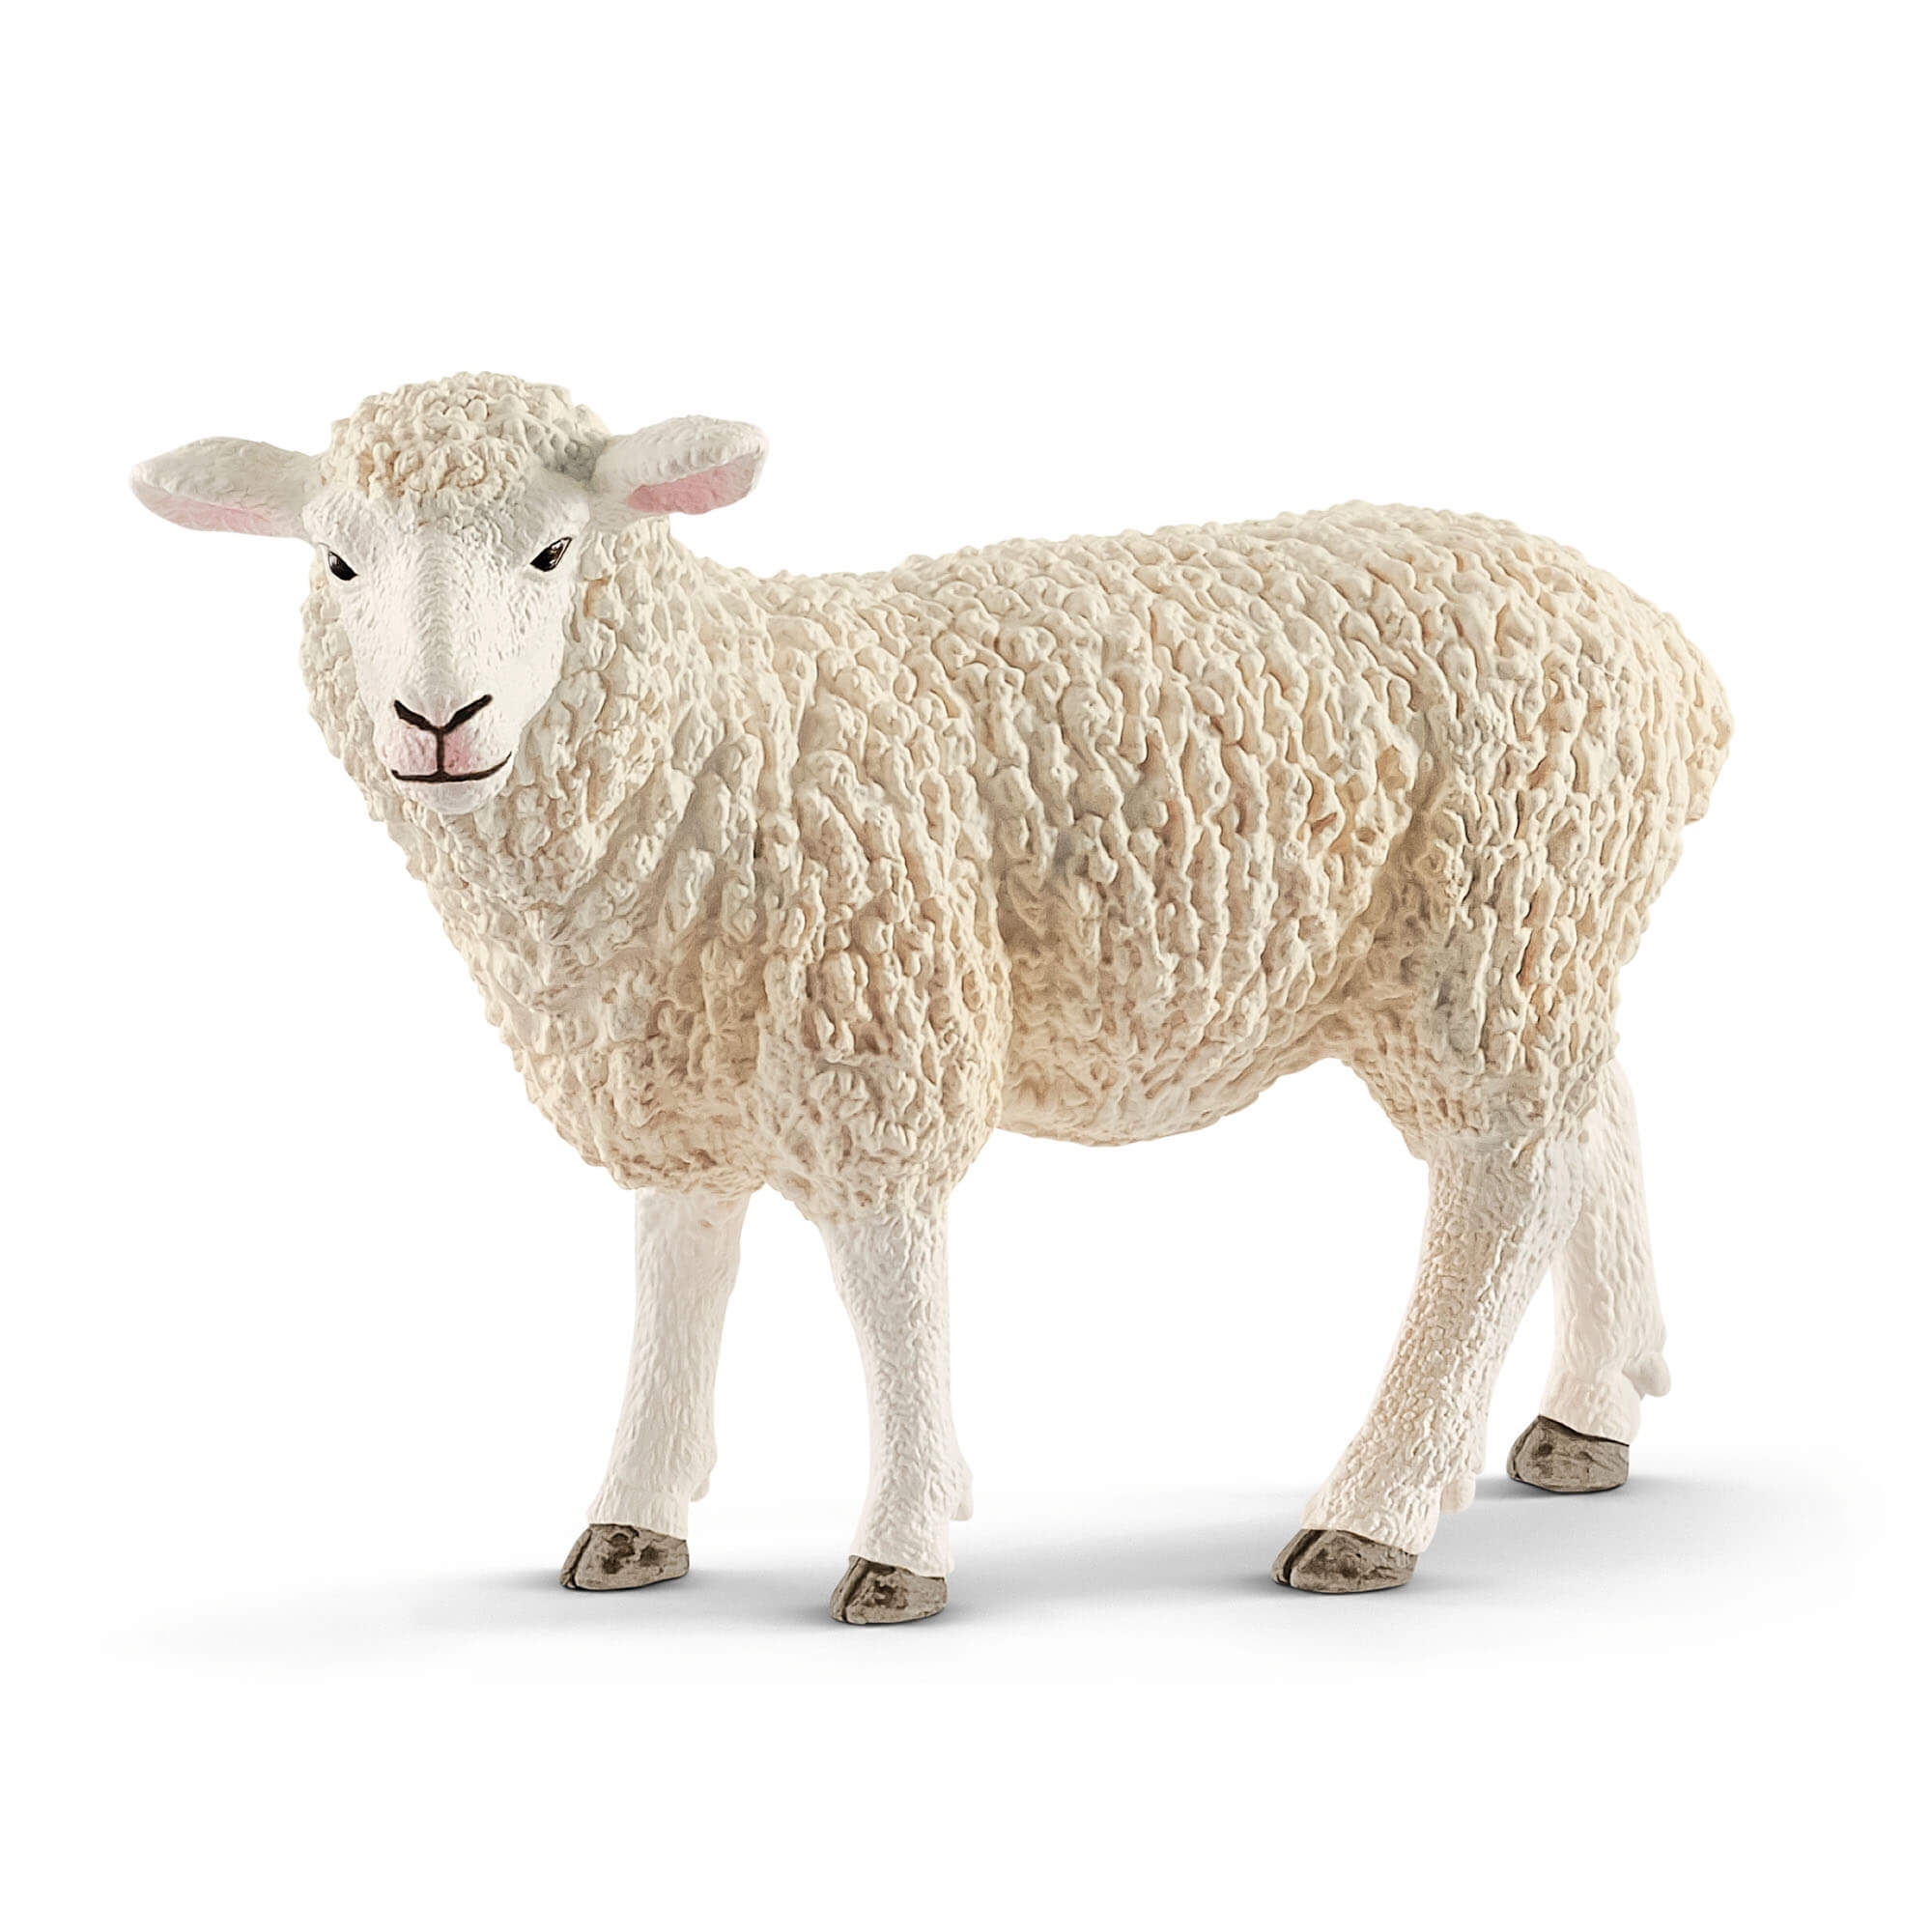 Schleich Farm World Sheep Animal Figure